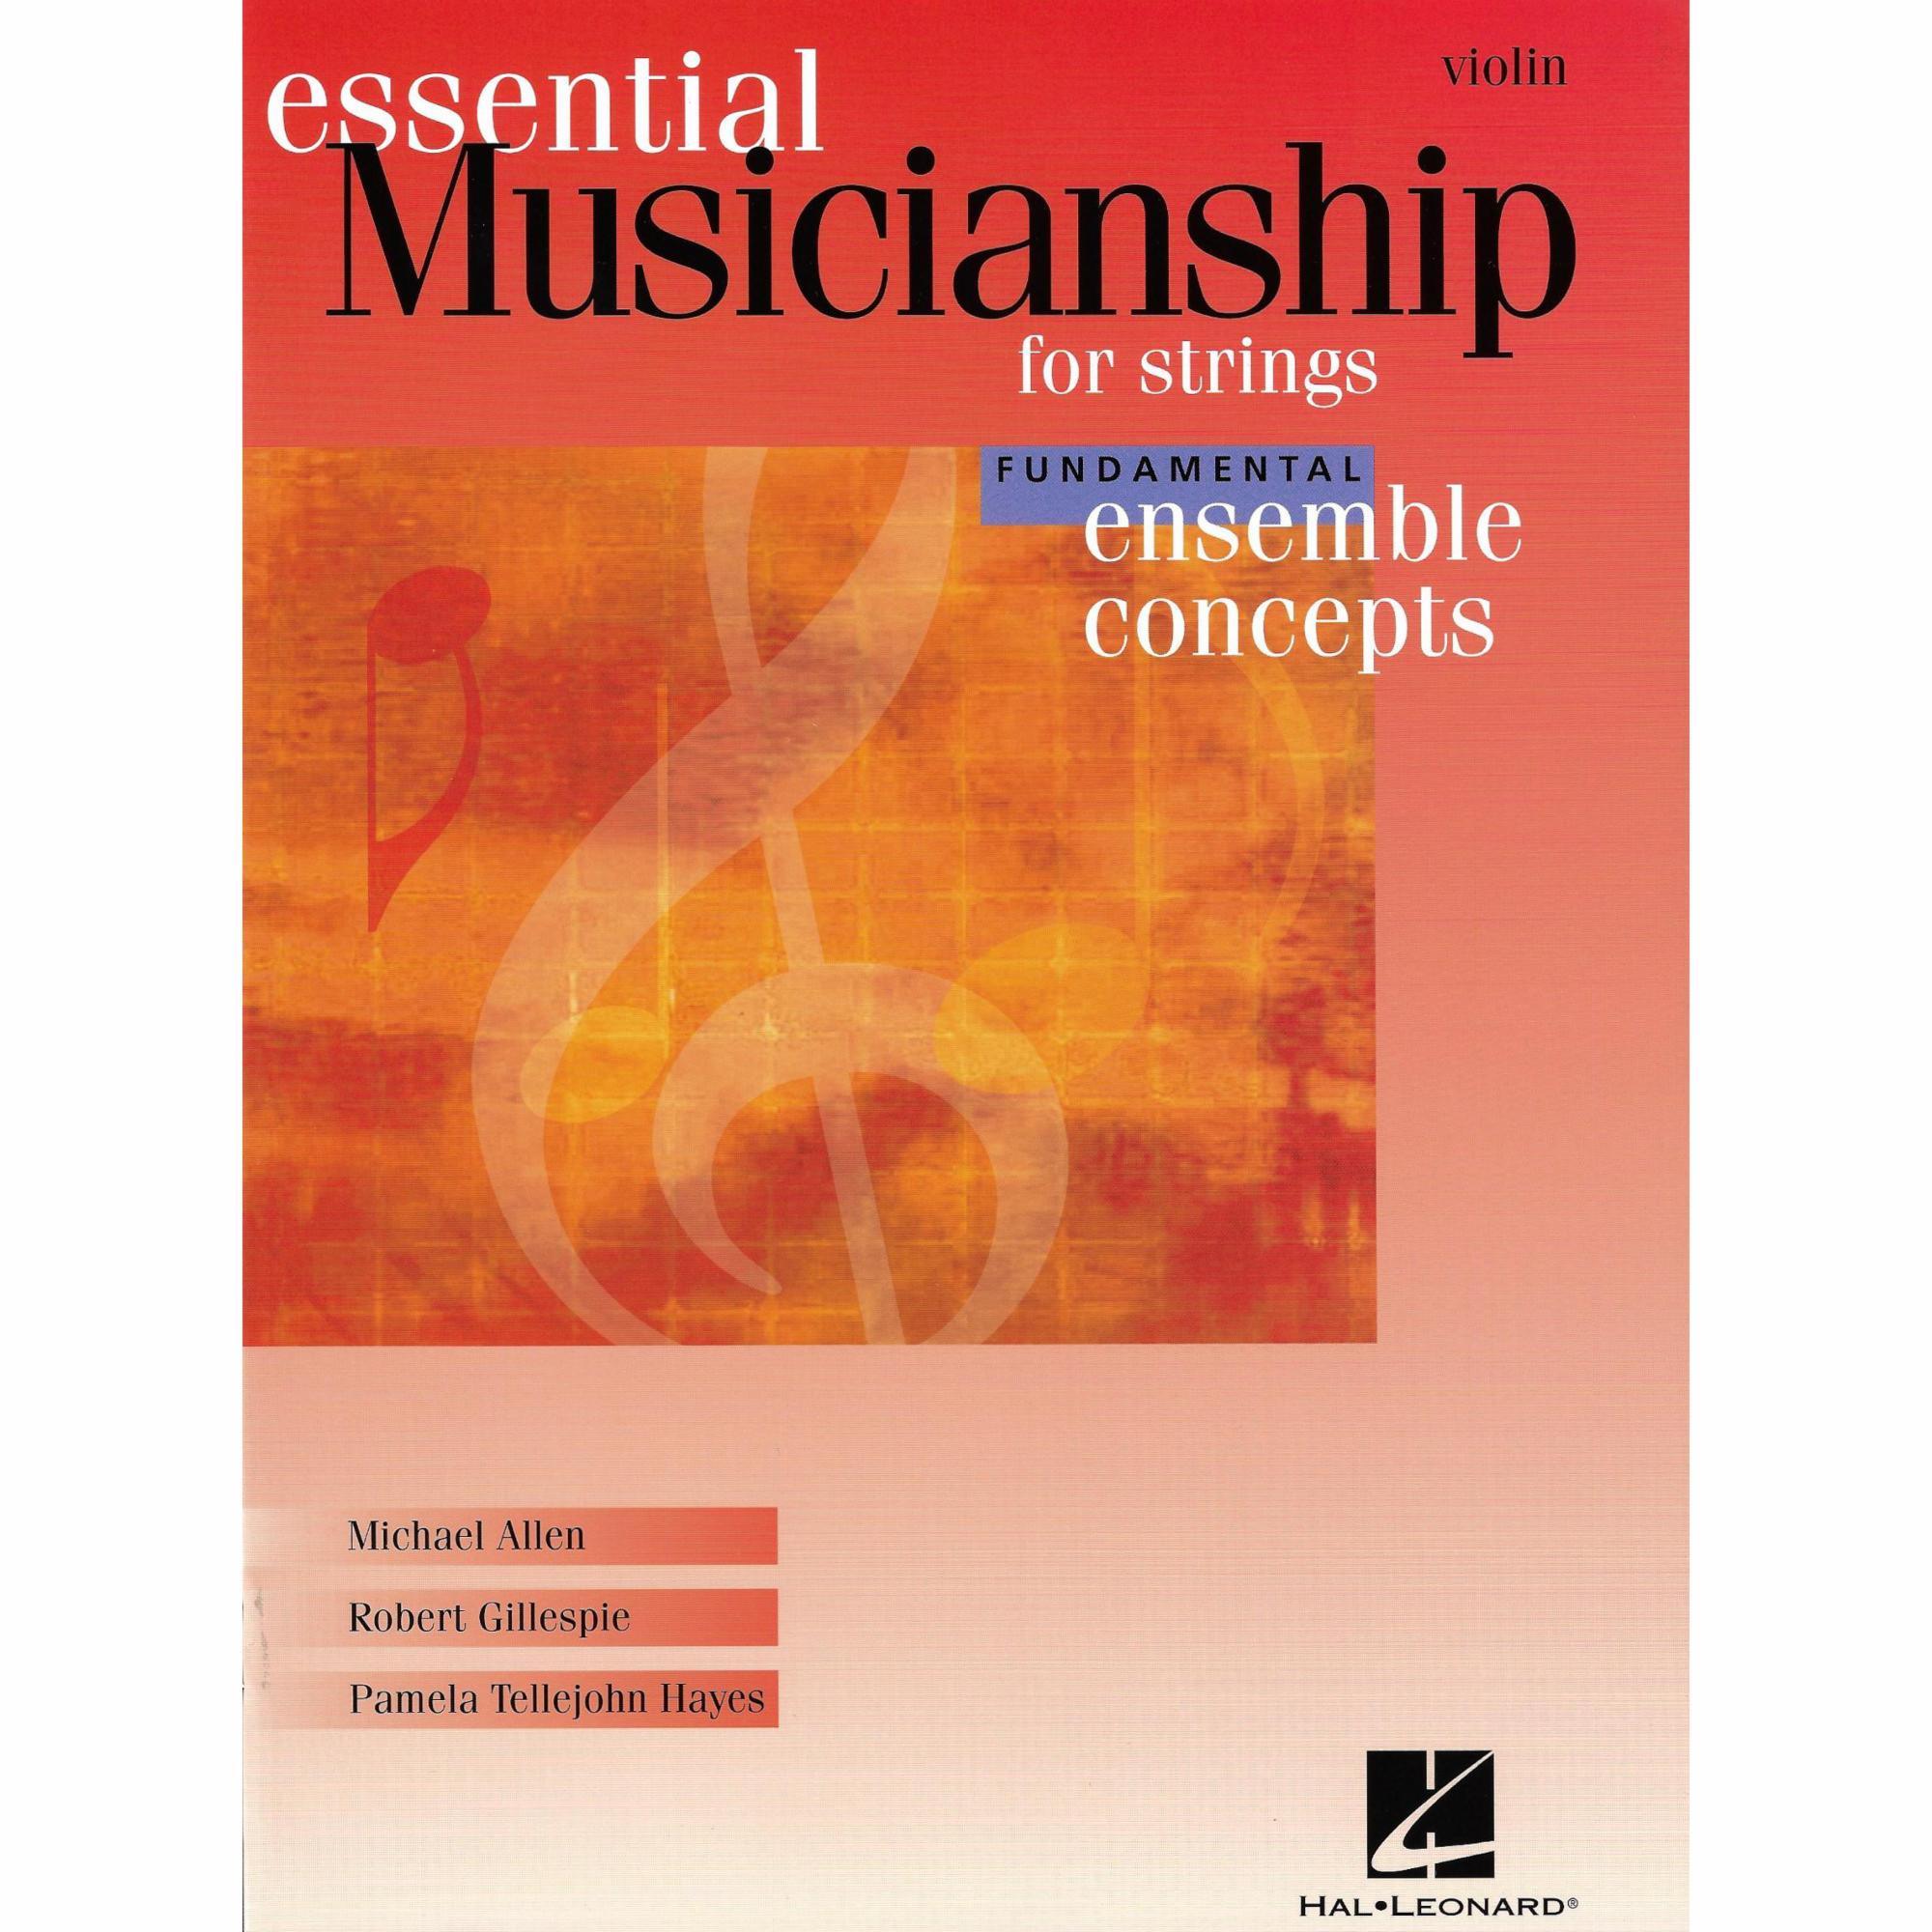 Essential Musicianship for Strings: Fundamental Ensemble Concepts